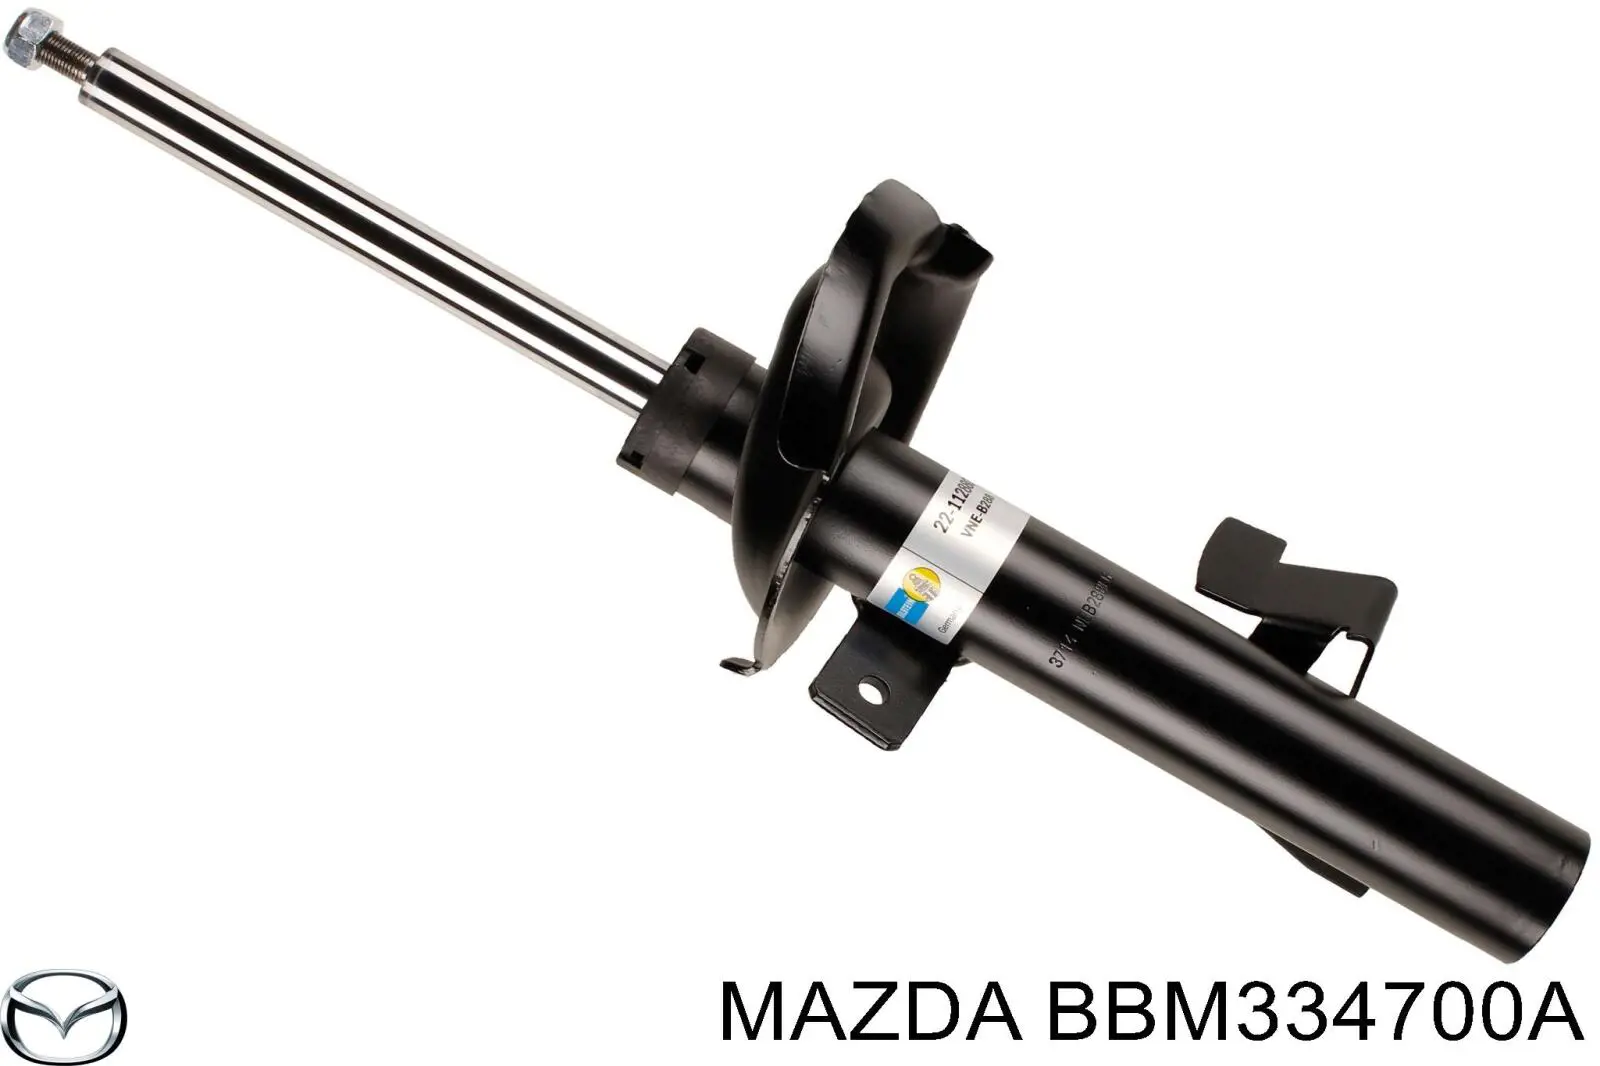 BBM334700A Mazda амортизатор передний правый